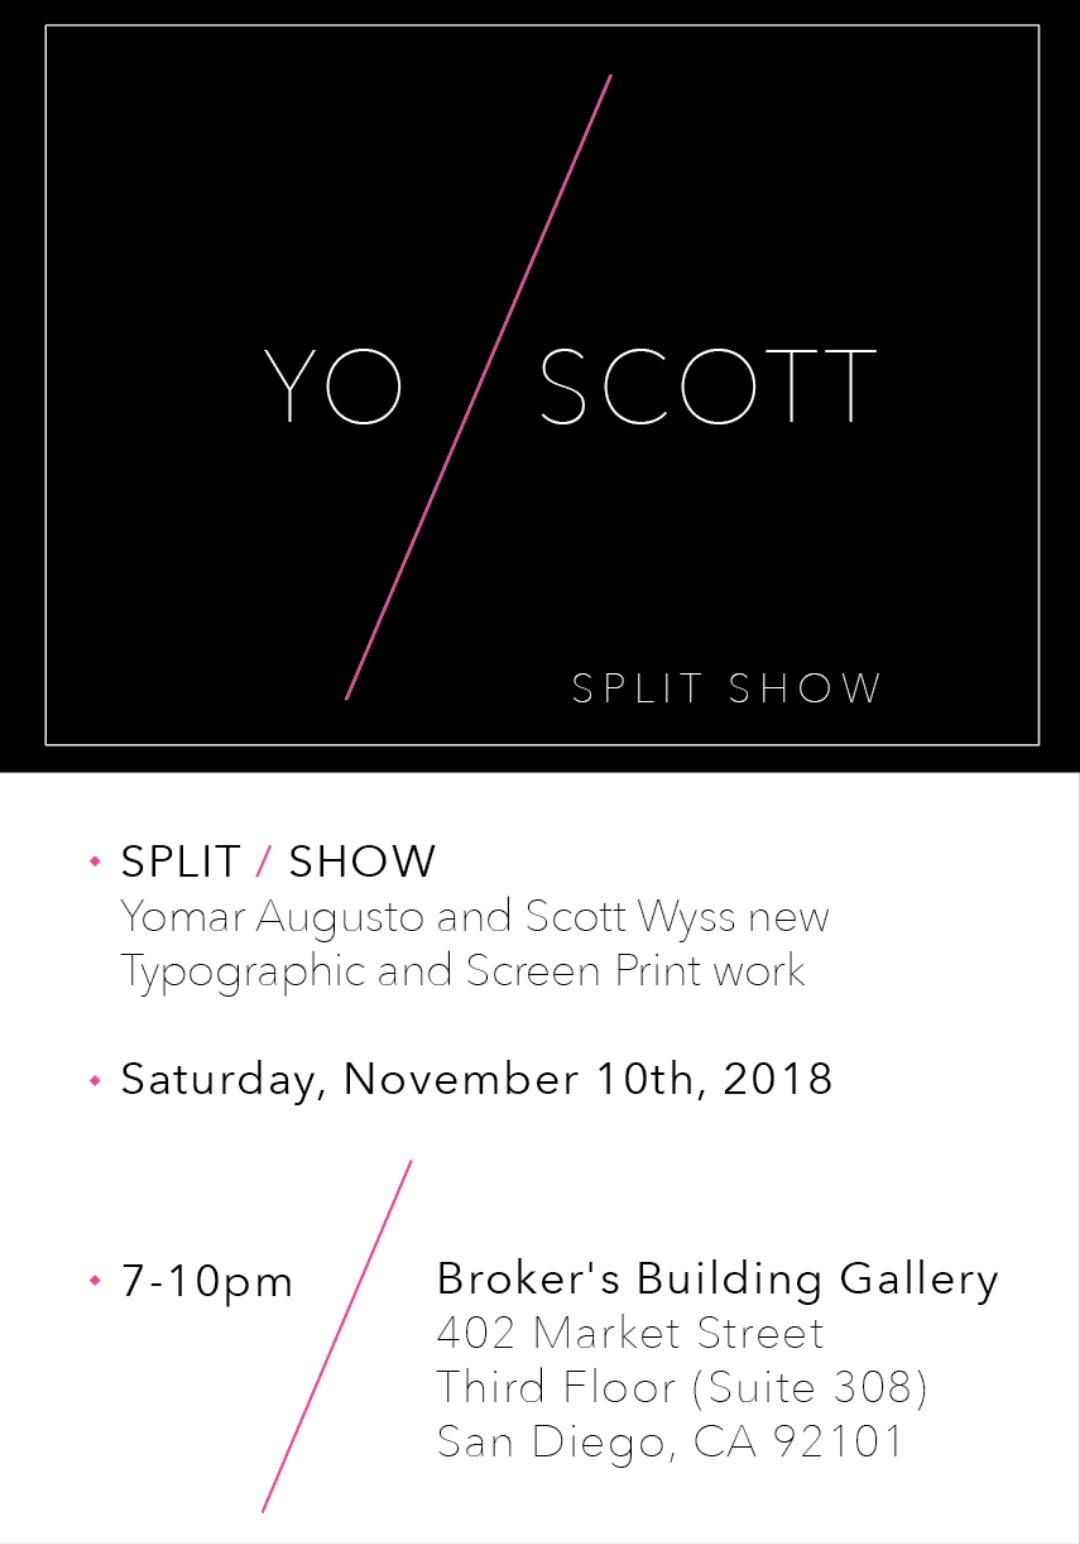 YO / SCOTT Split Show